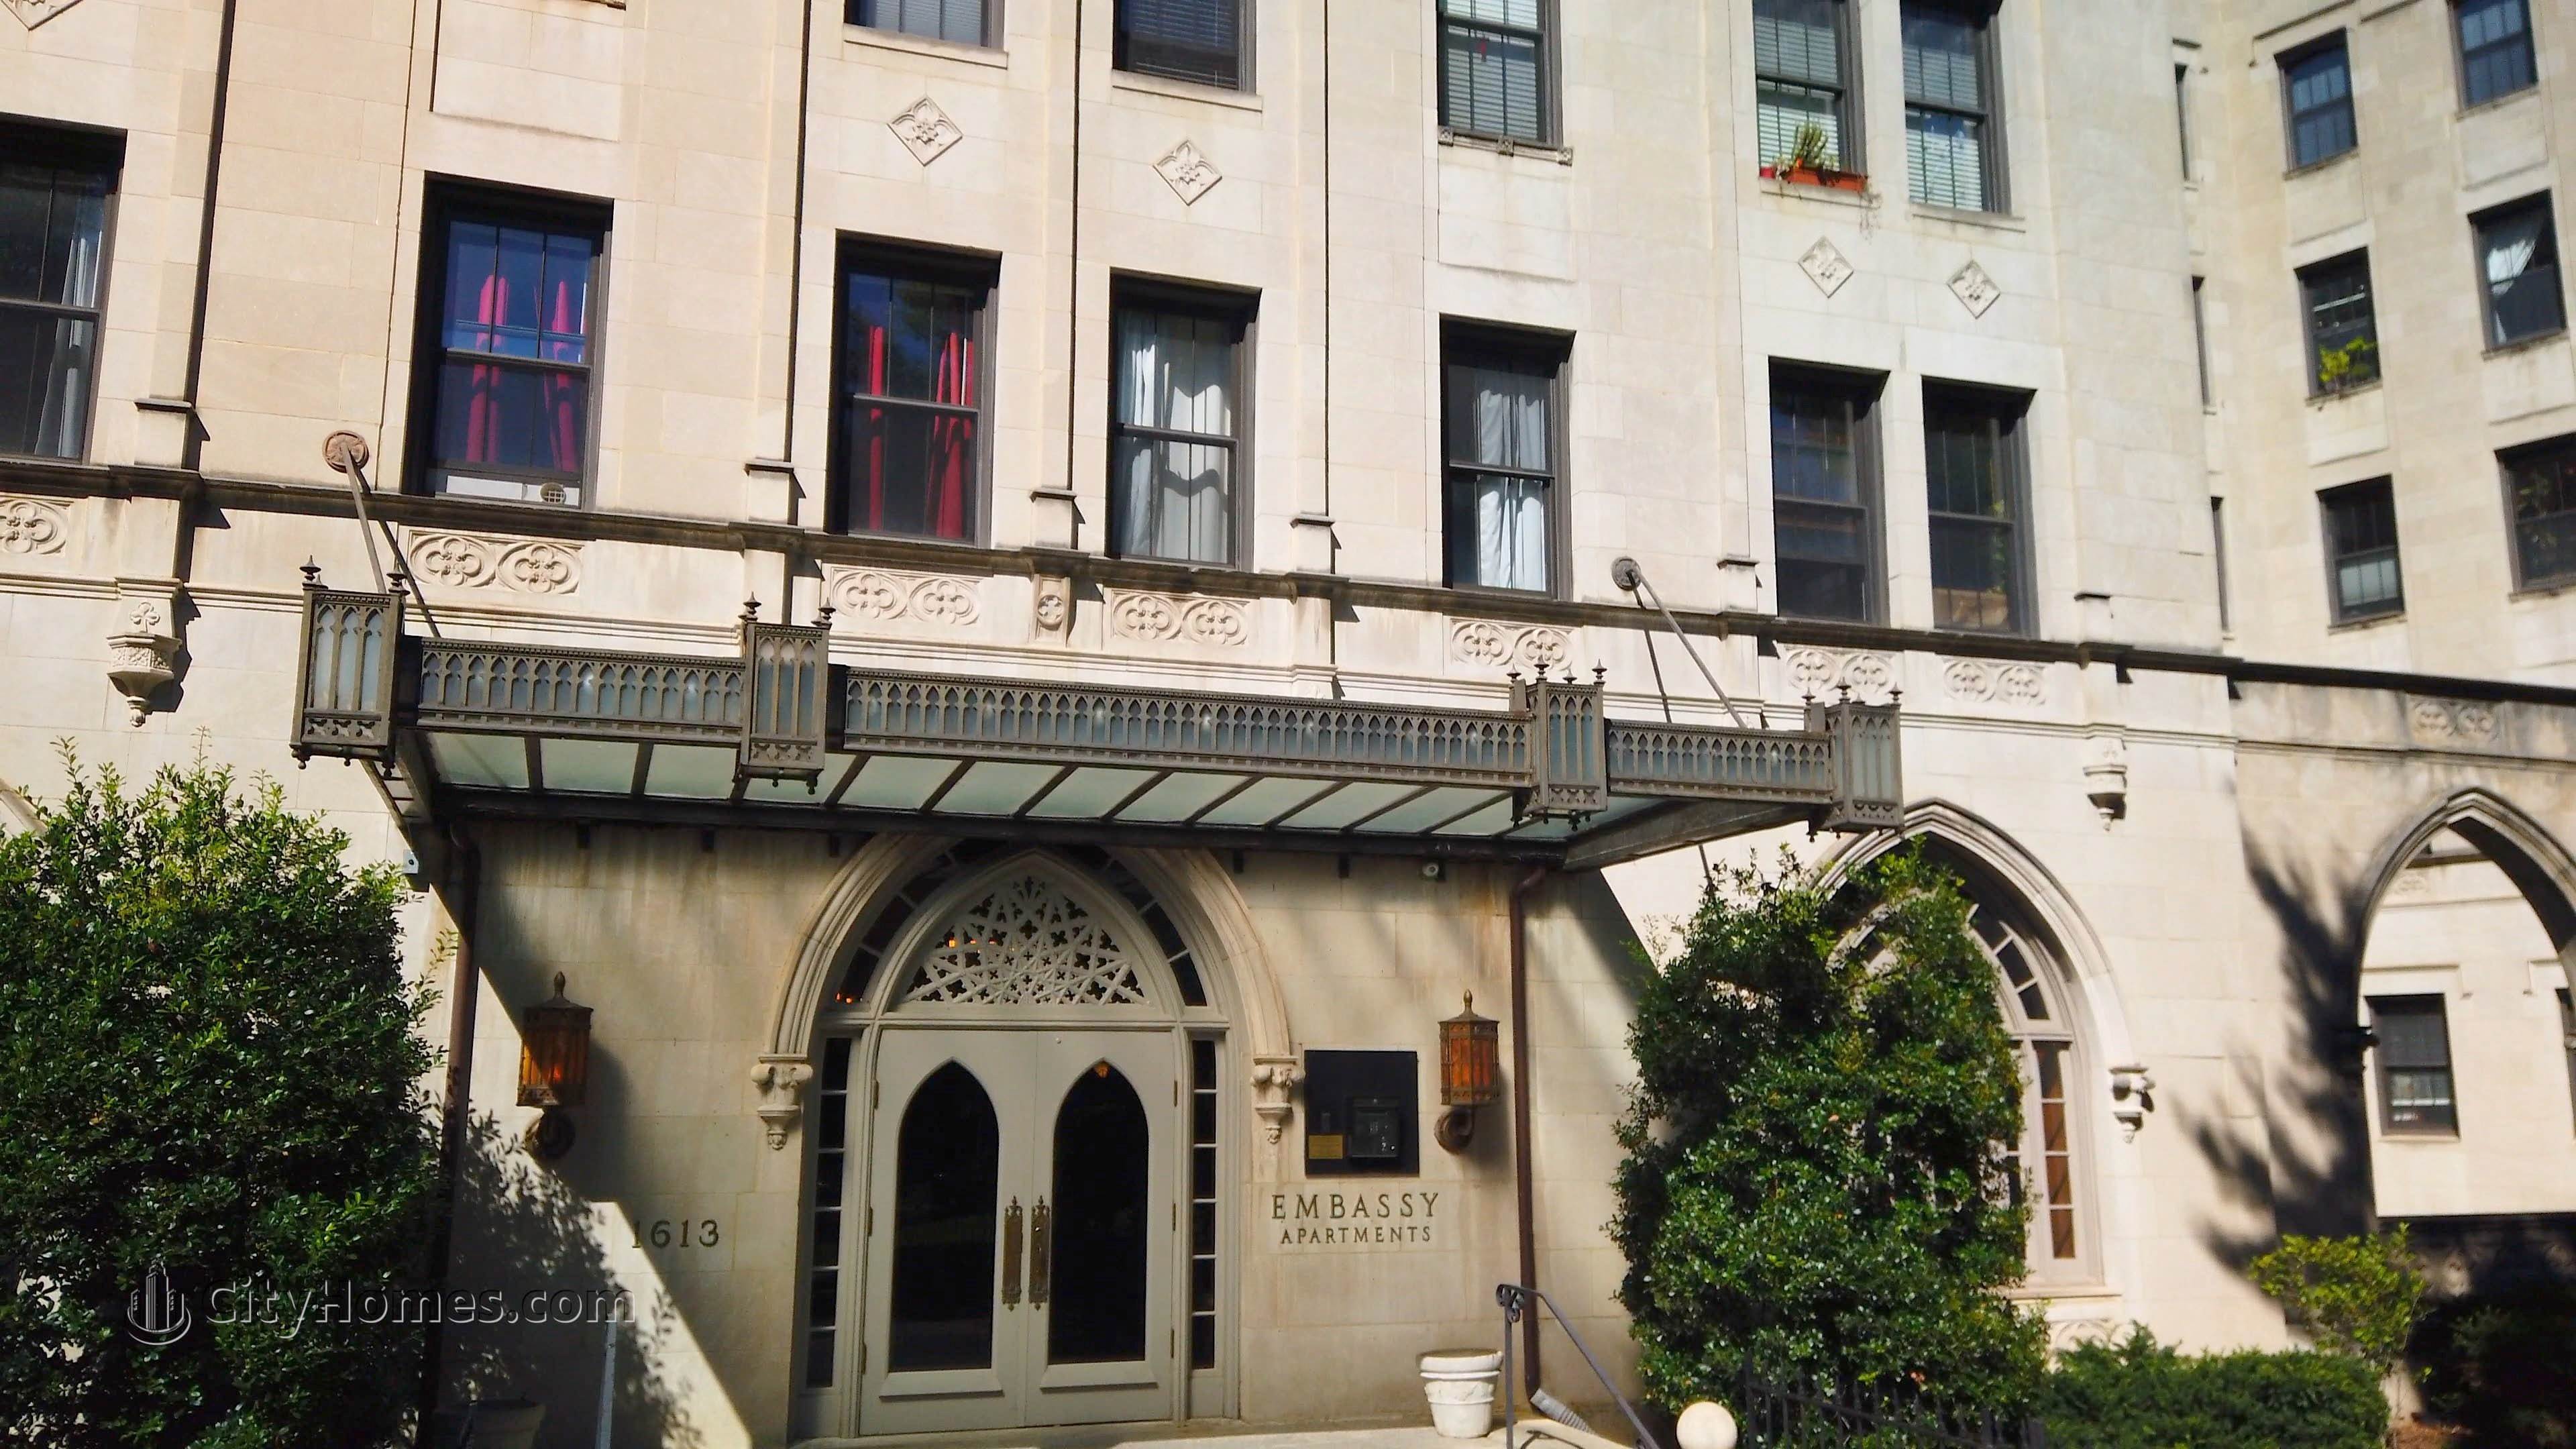 The Embassy gebouw op 1613 Harvard St NW, Mount Pleasant, Washington, DC 20009